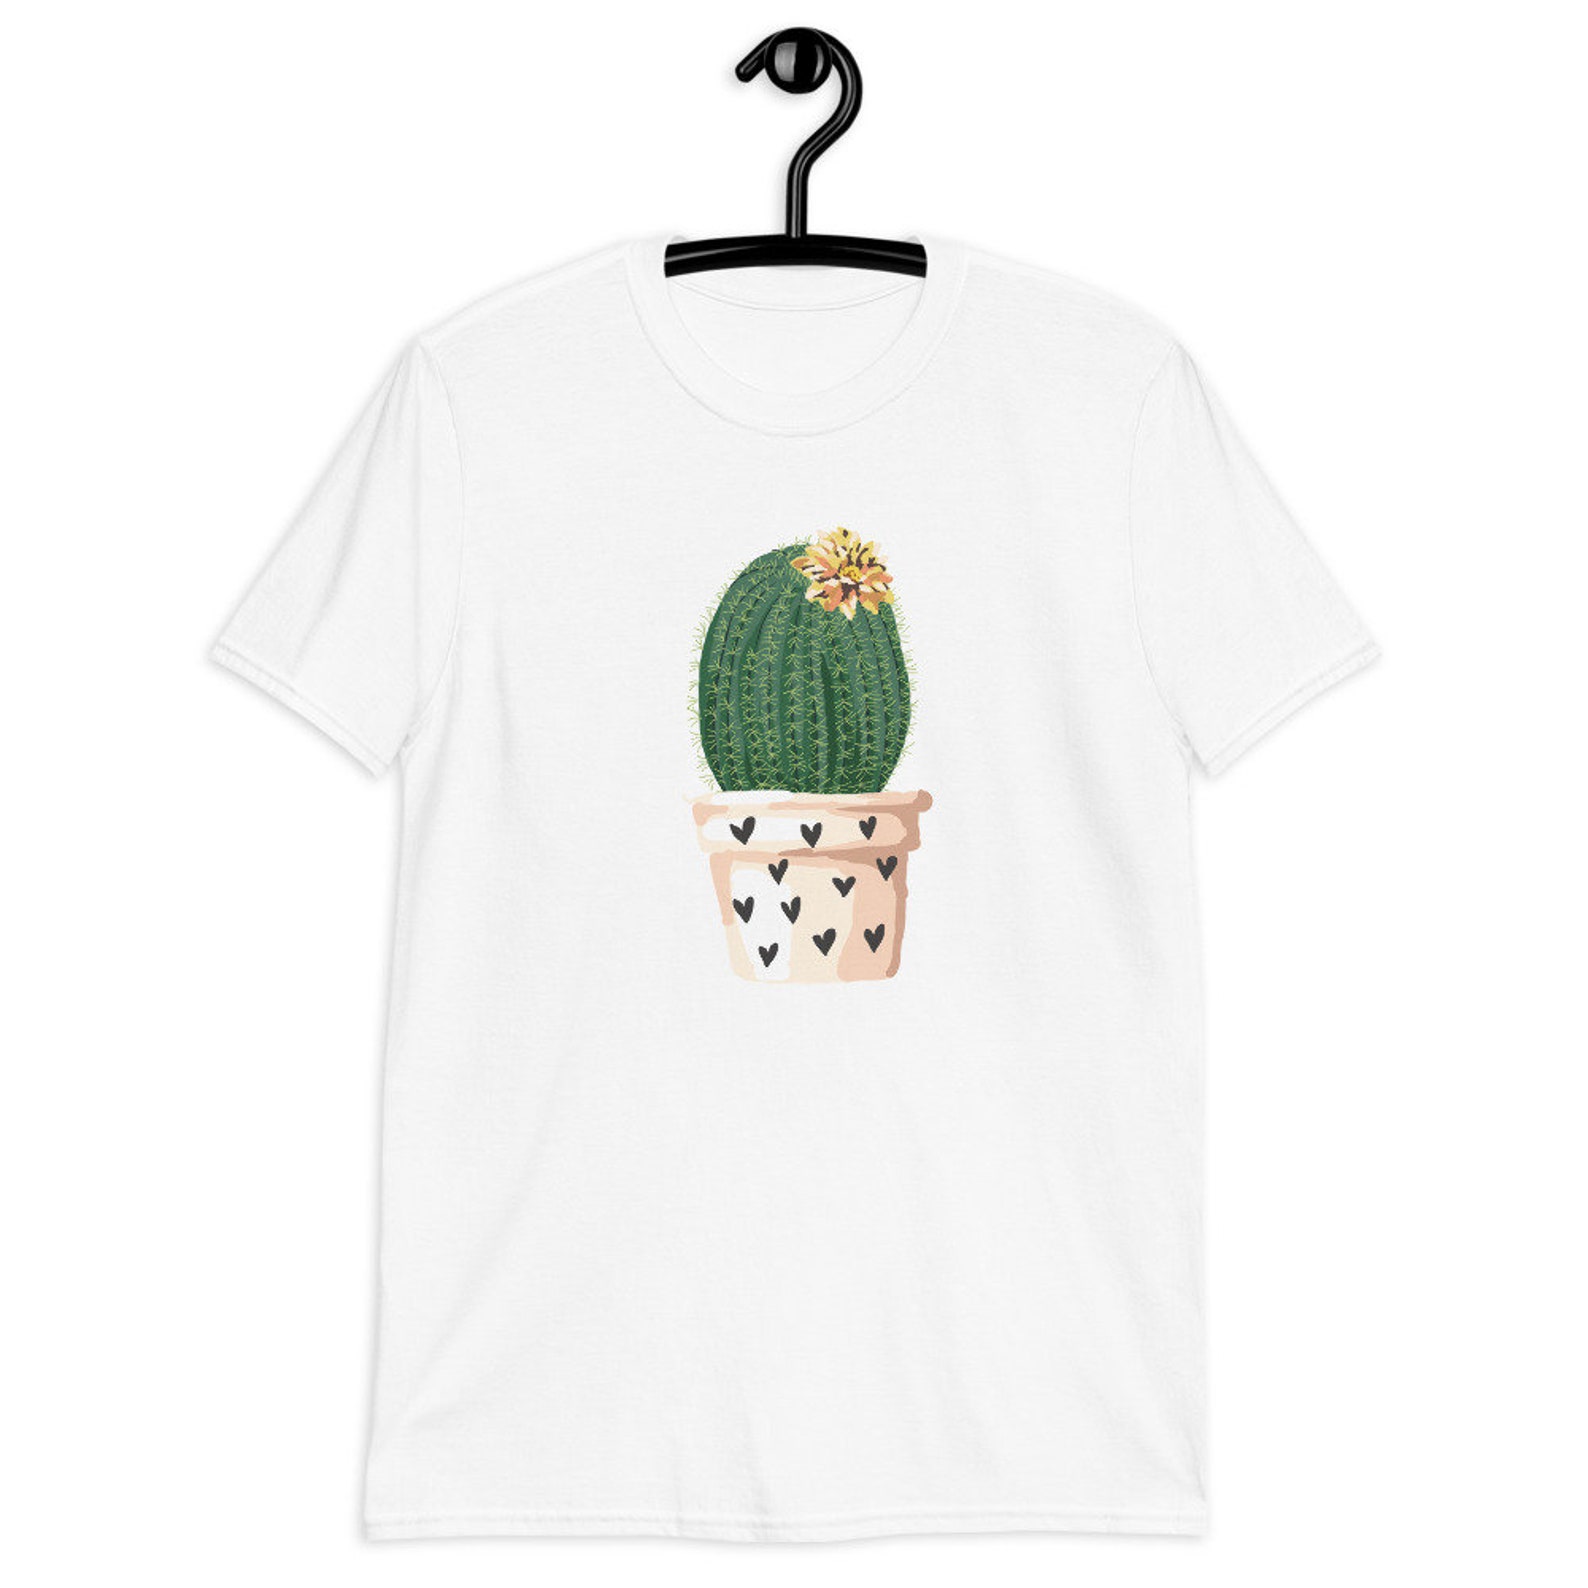 Cactus Shirt, Cactus T-shirt, Cactus Shirt for Women, Plant Shirt ...